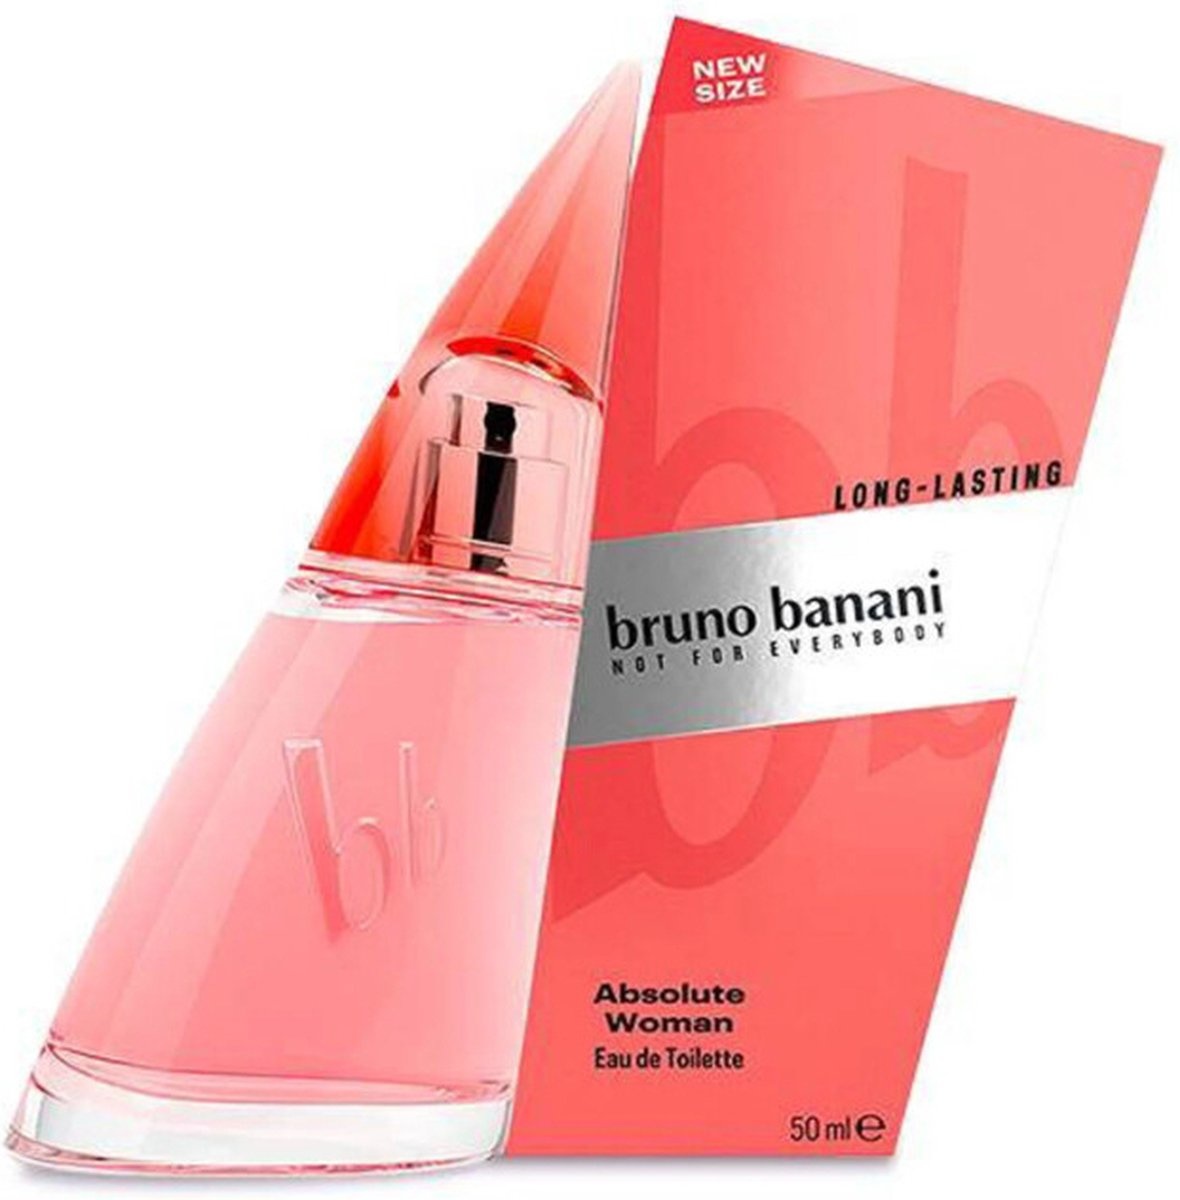 Bruno Banani Absolute Woman Eau de Toilette Spray - 50 ml - Verpackung beschädigt